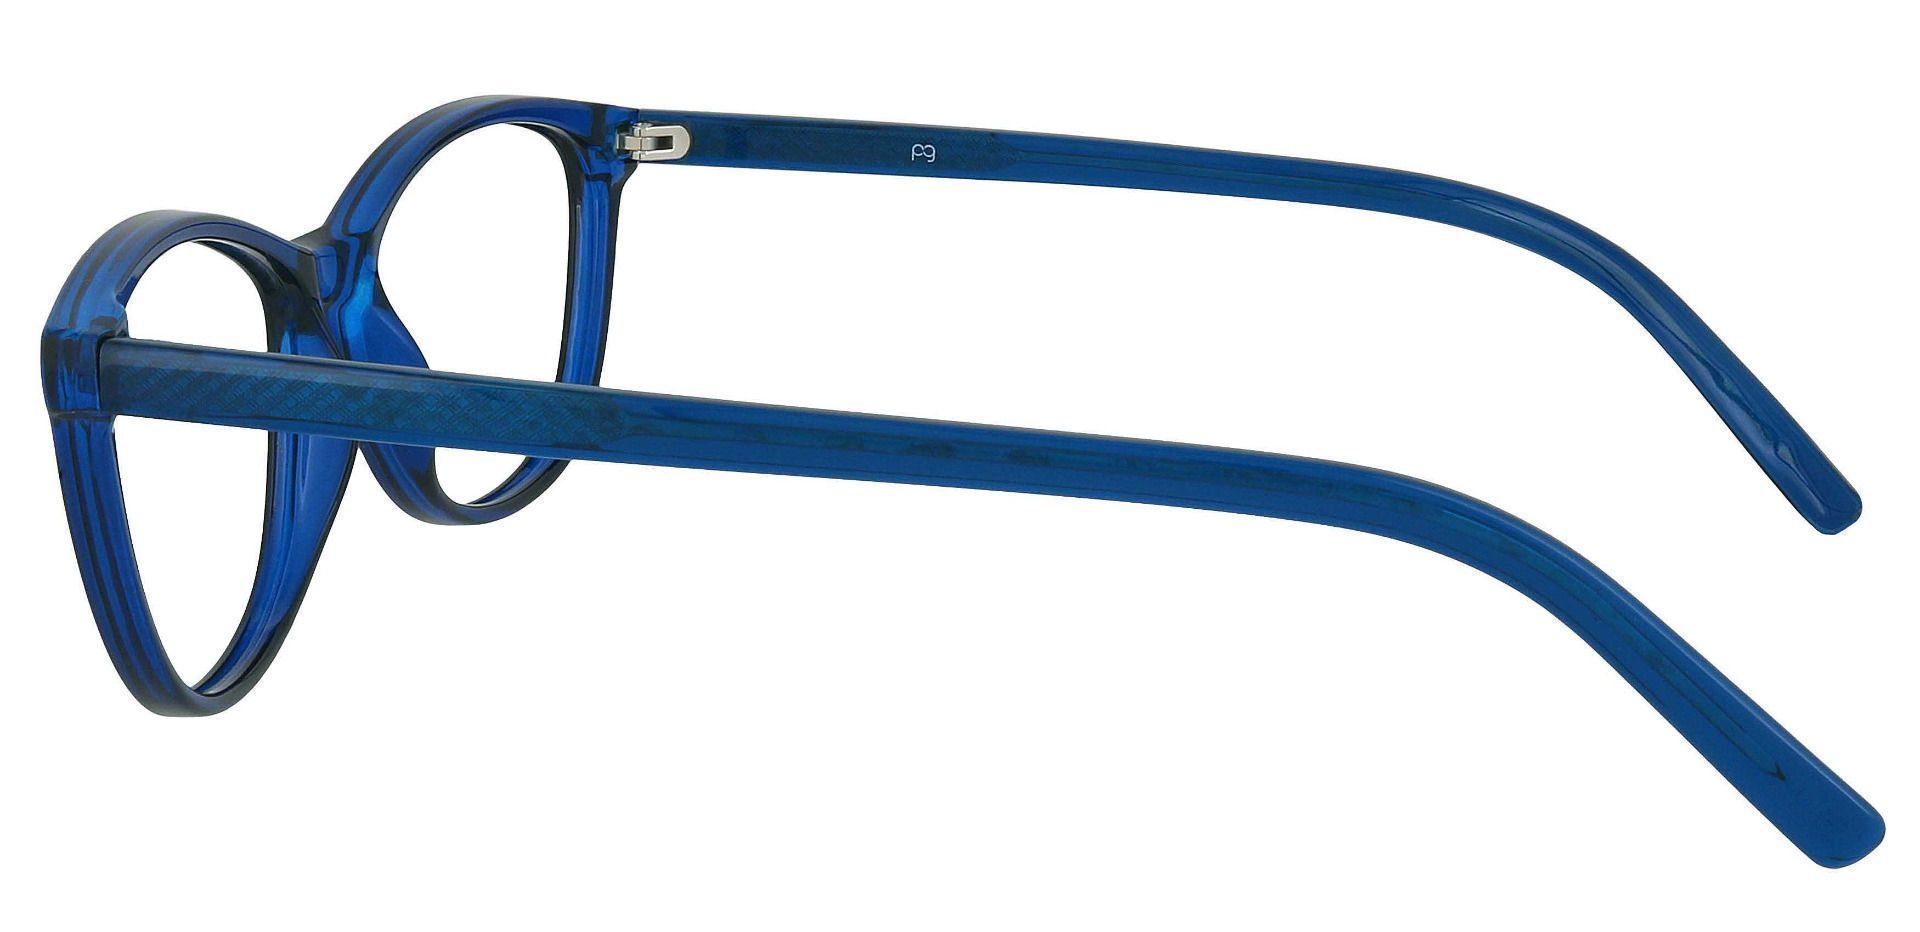 Sally Oval Prescription Glasses - Blue